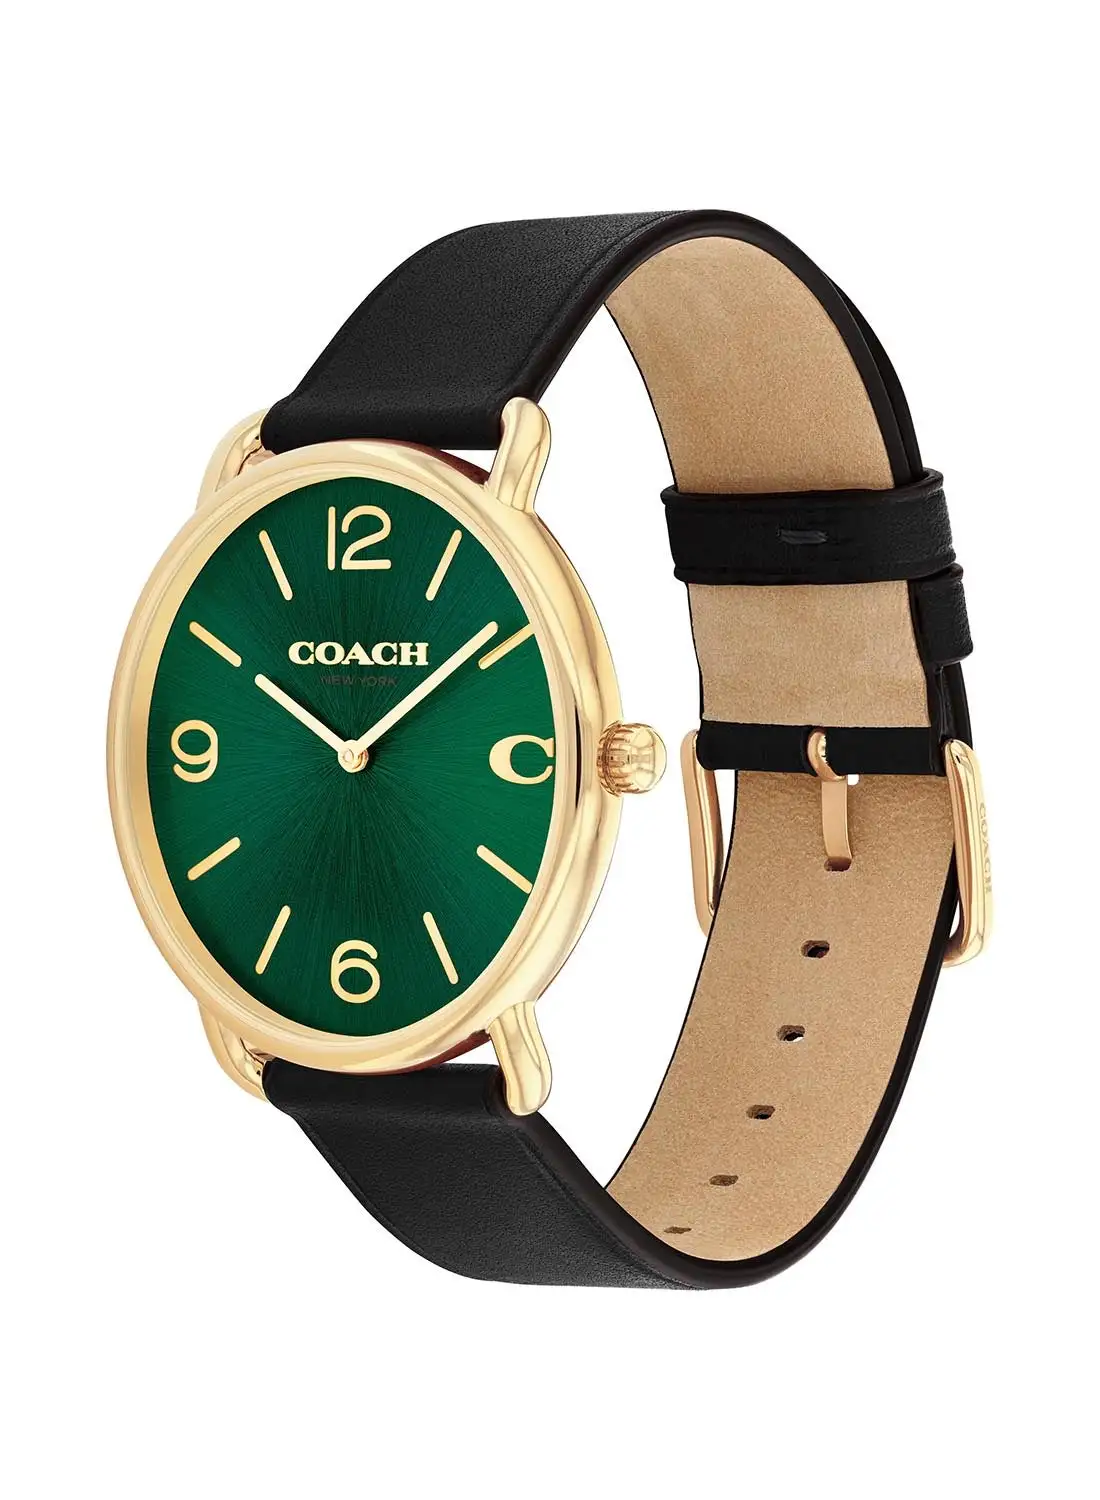 COACH Men's Analog Round Shape Leather Wrist Watch 14602648 - 41 Mm